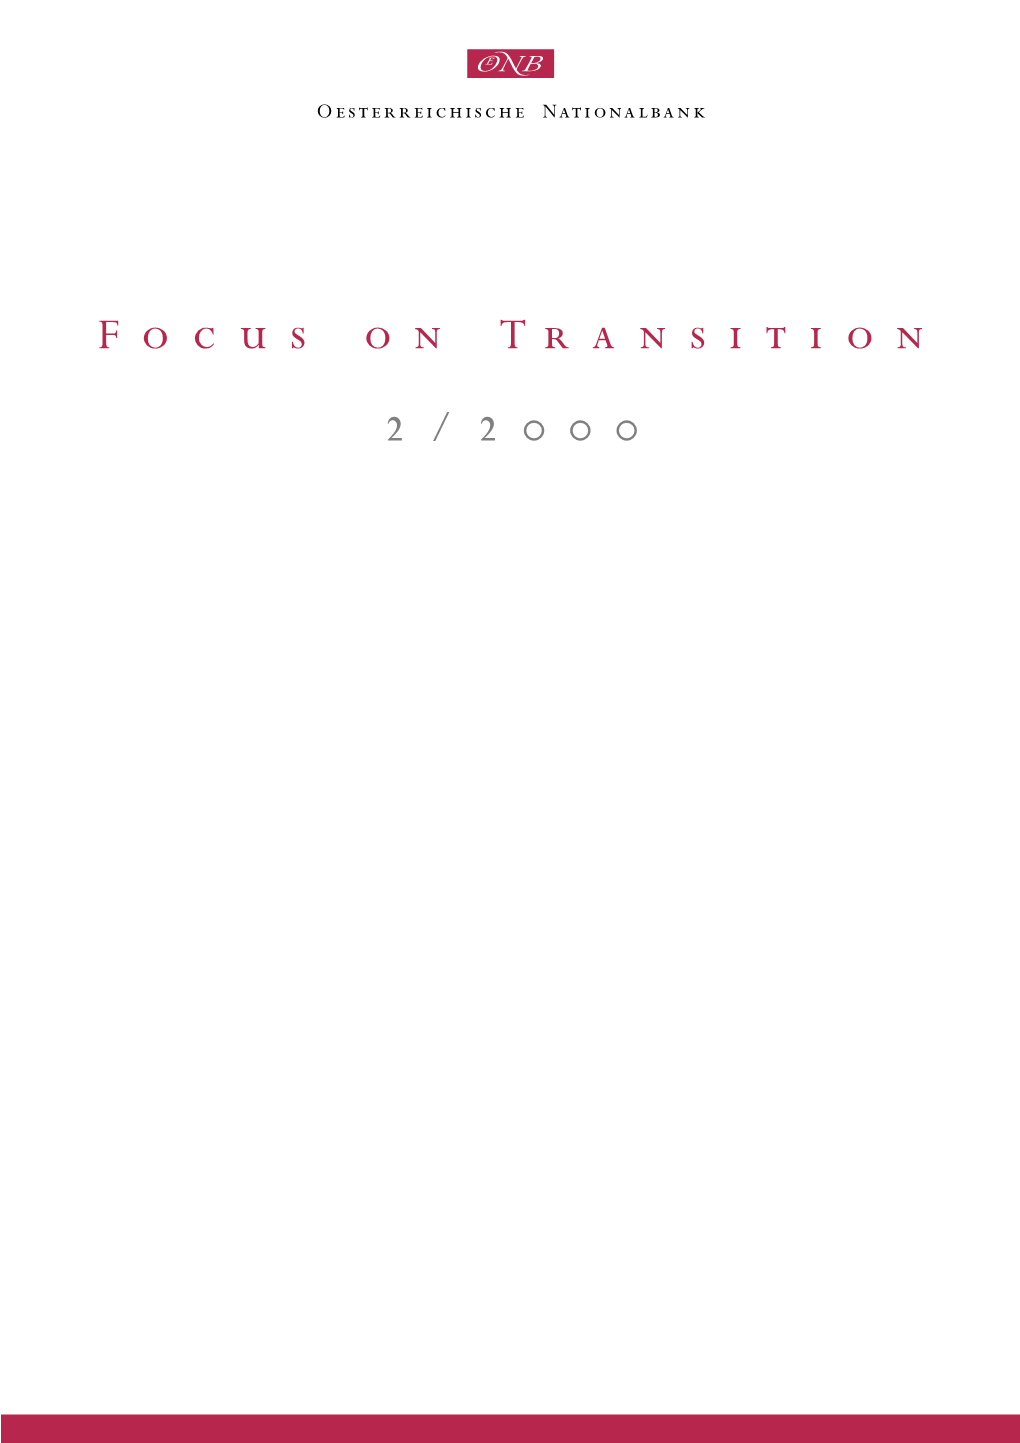 Focus on Transition 2/2000 Legend Ð = the Numerical Value Is Zero